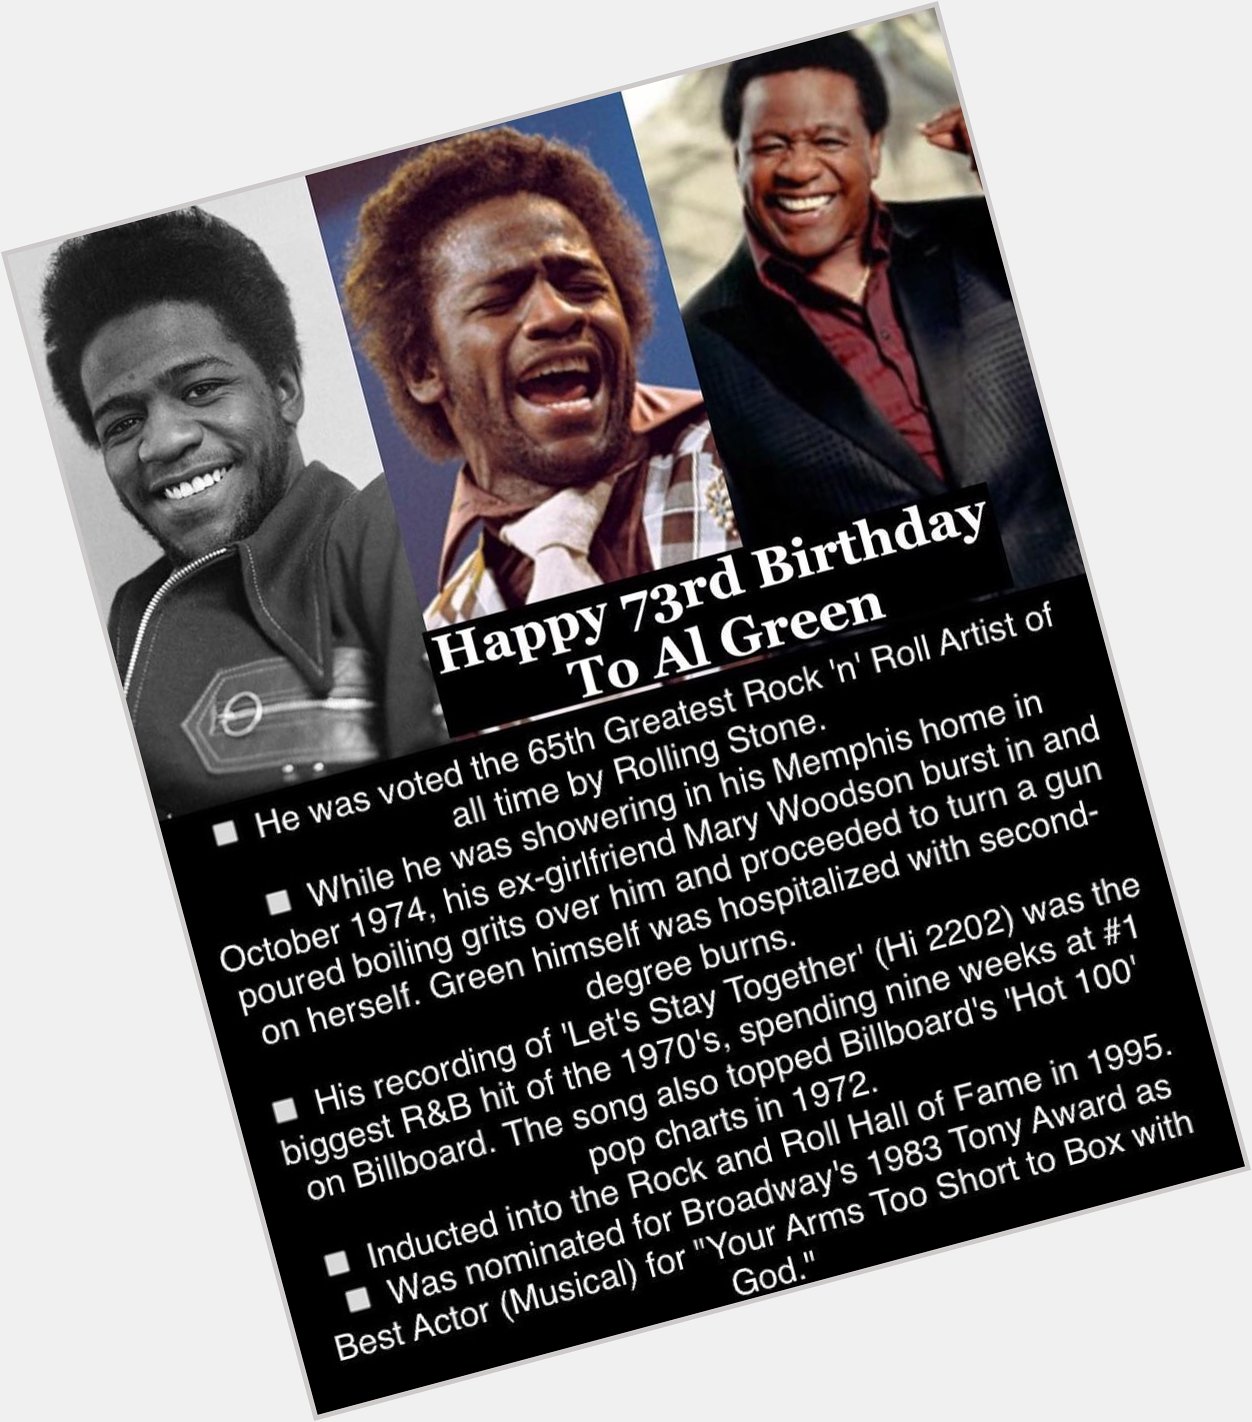 April 13: Happy 73rd Birthday to Al Green 